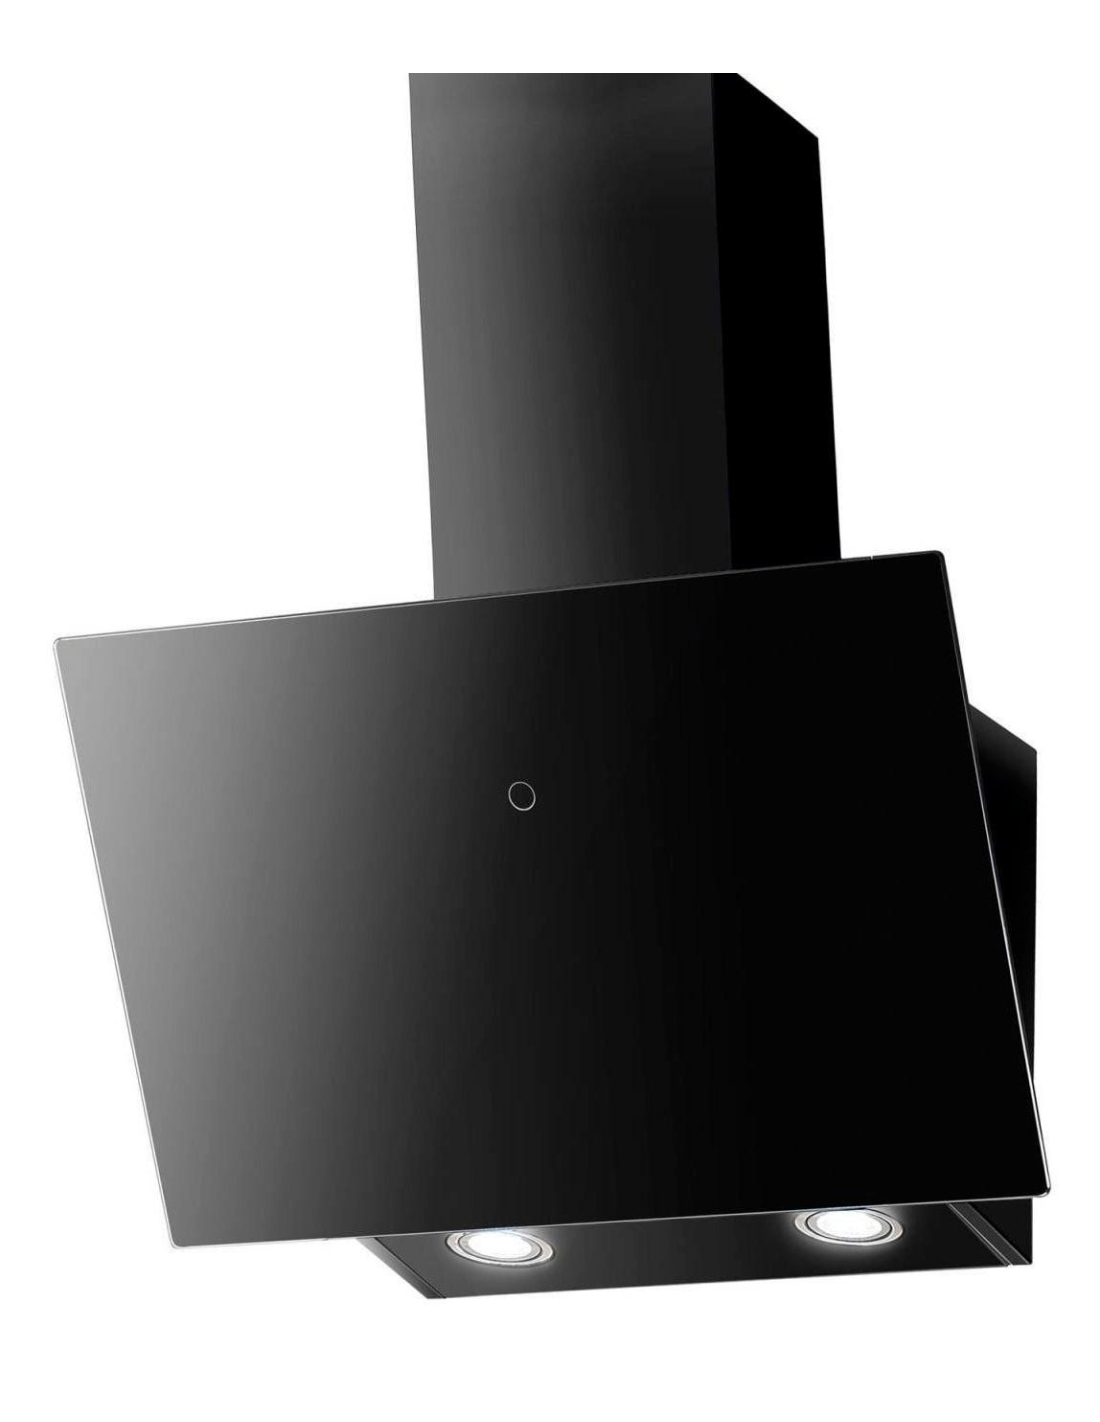 Campana extractora decorativa cristal negro 60cm Mepamsa CUADRO 60 NEGRA  330.0567.495